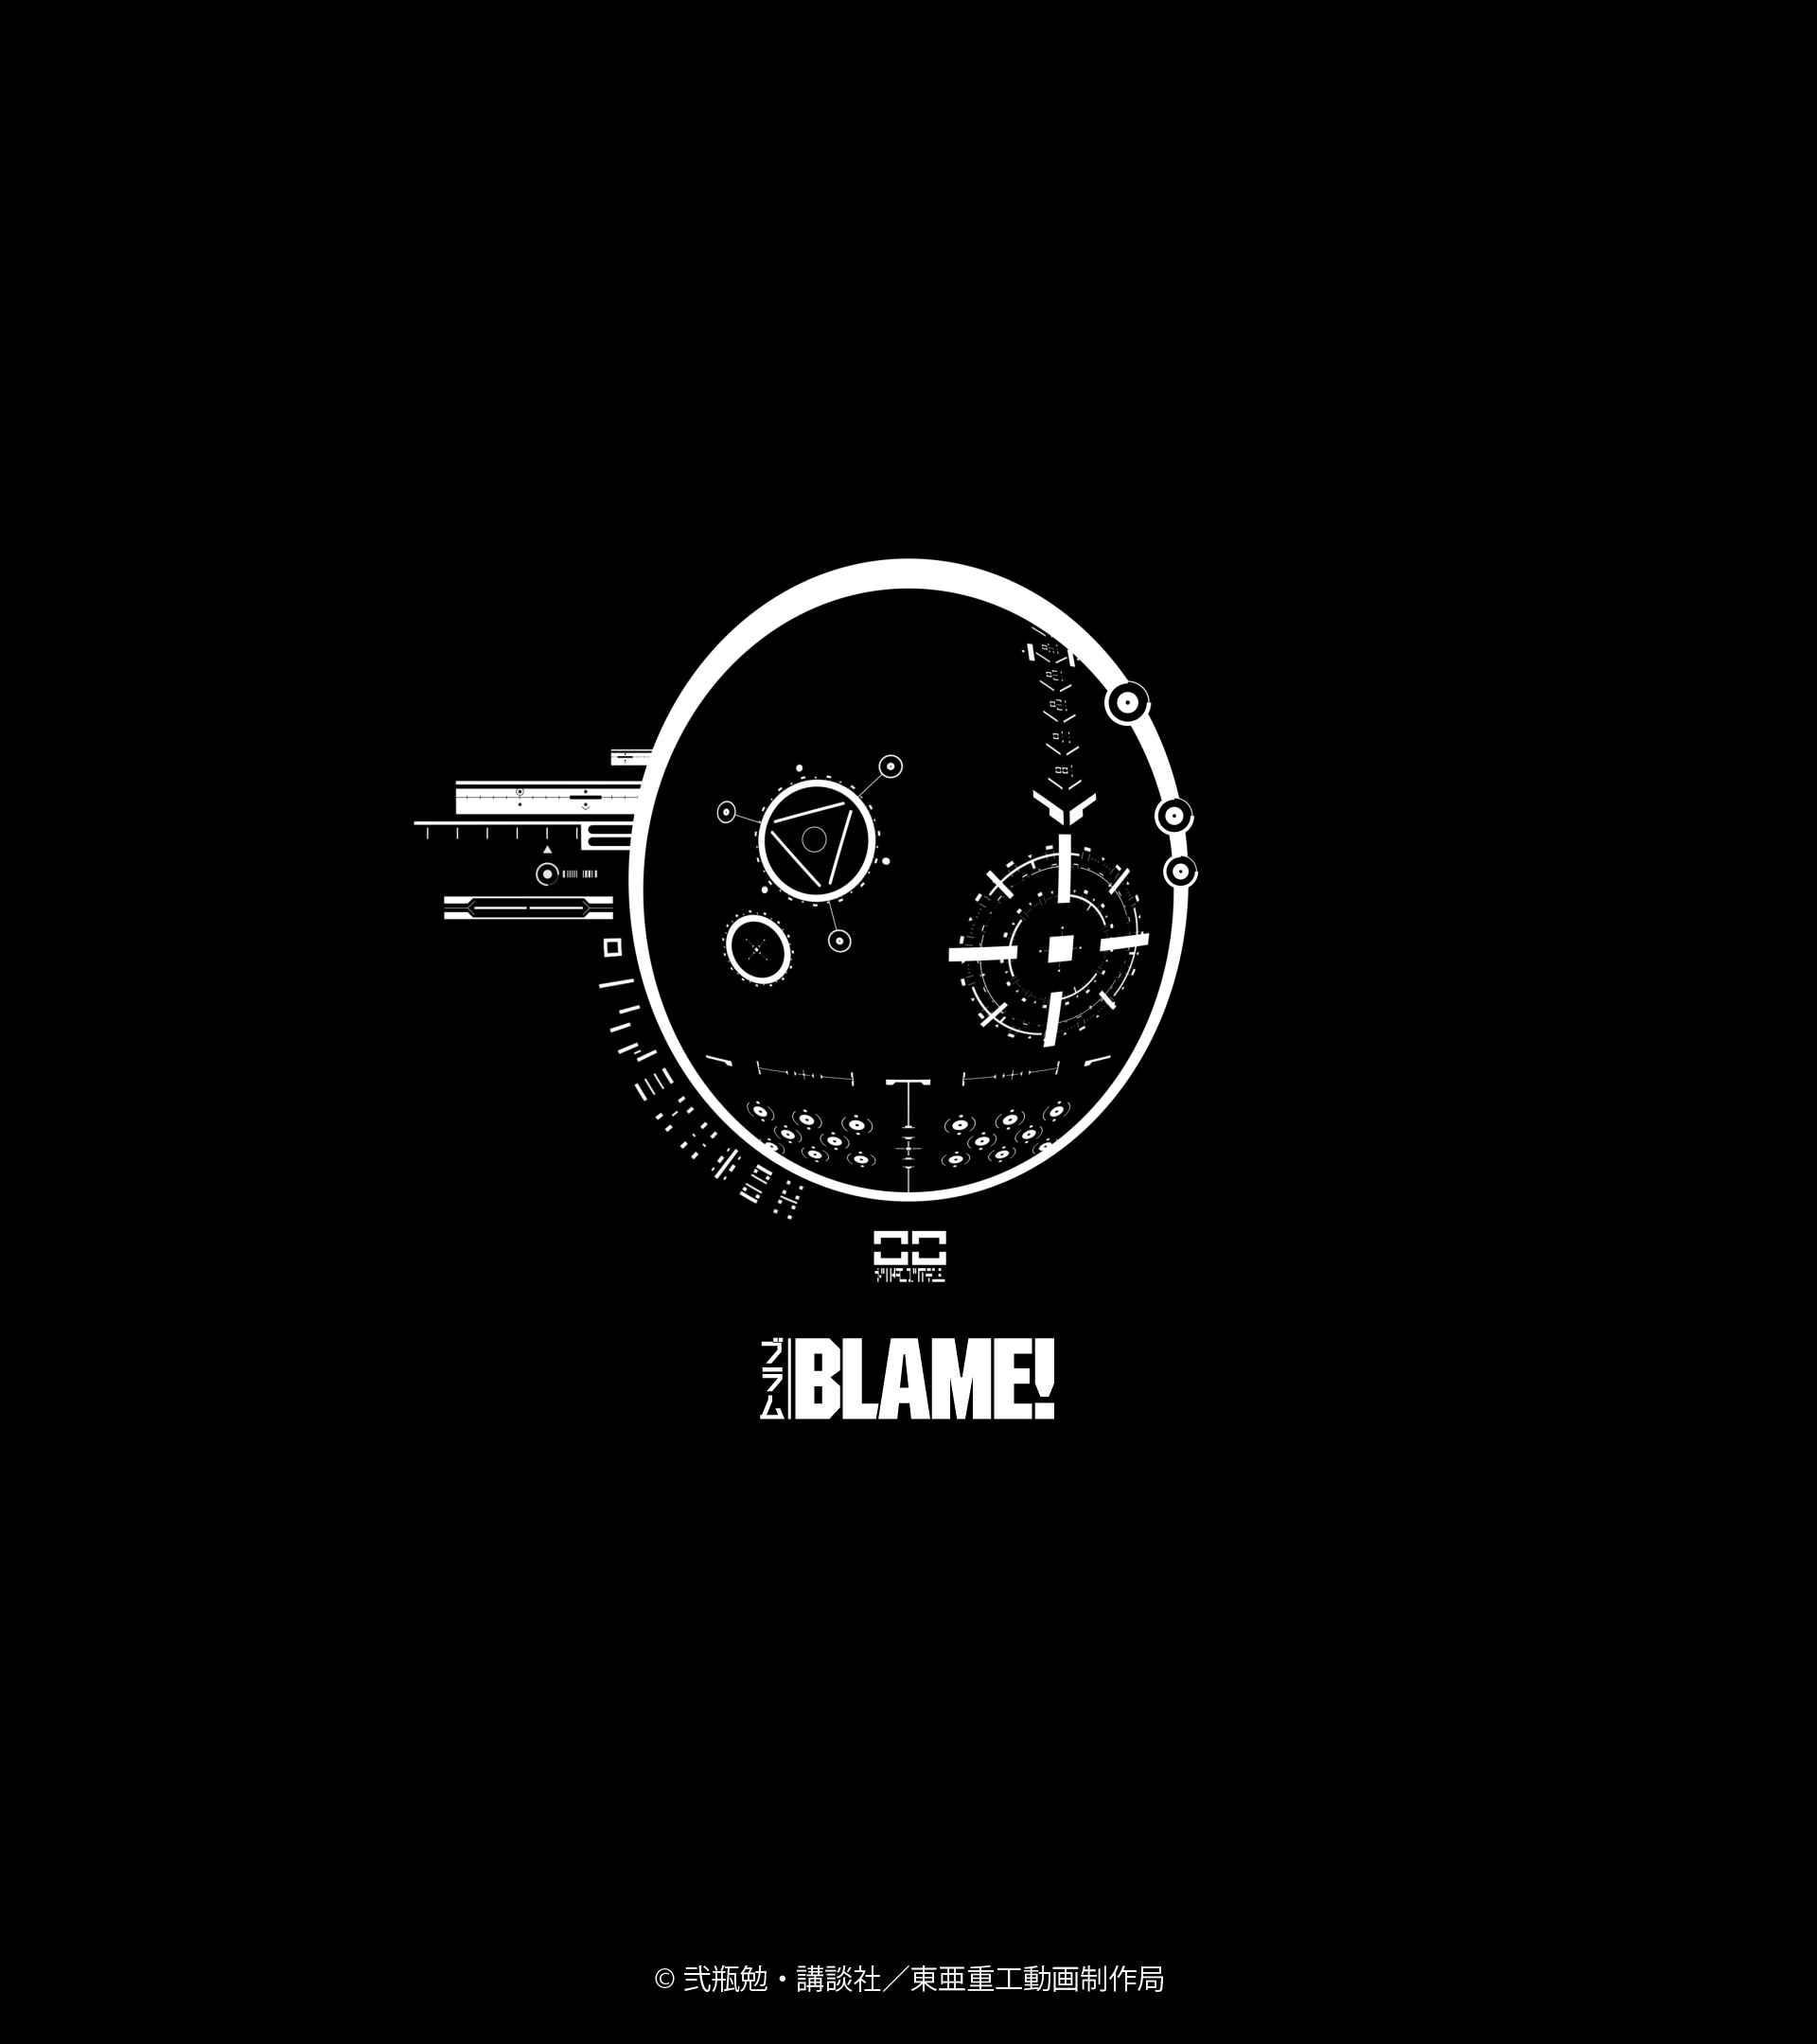 Blame ブラム 公式サイト